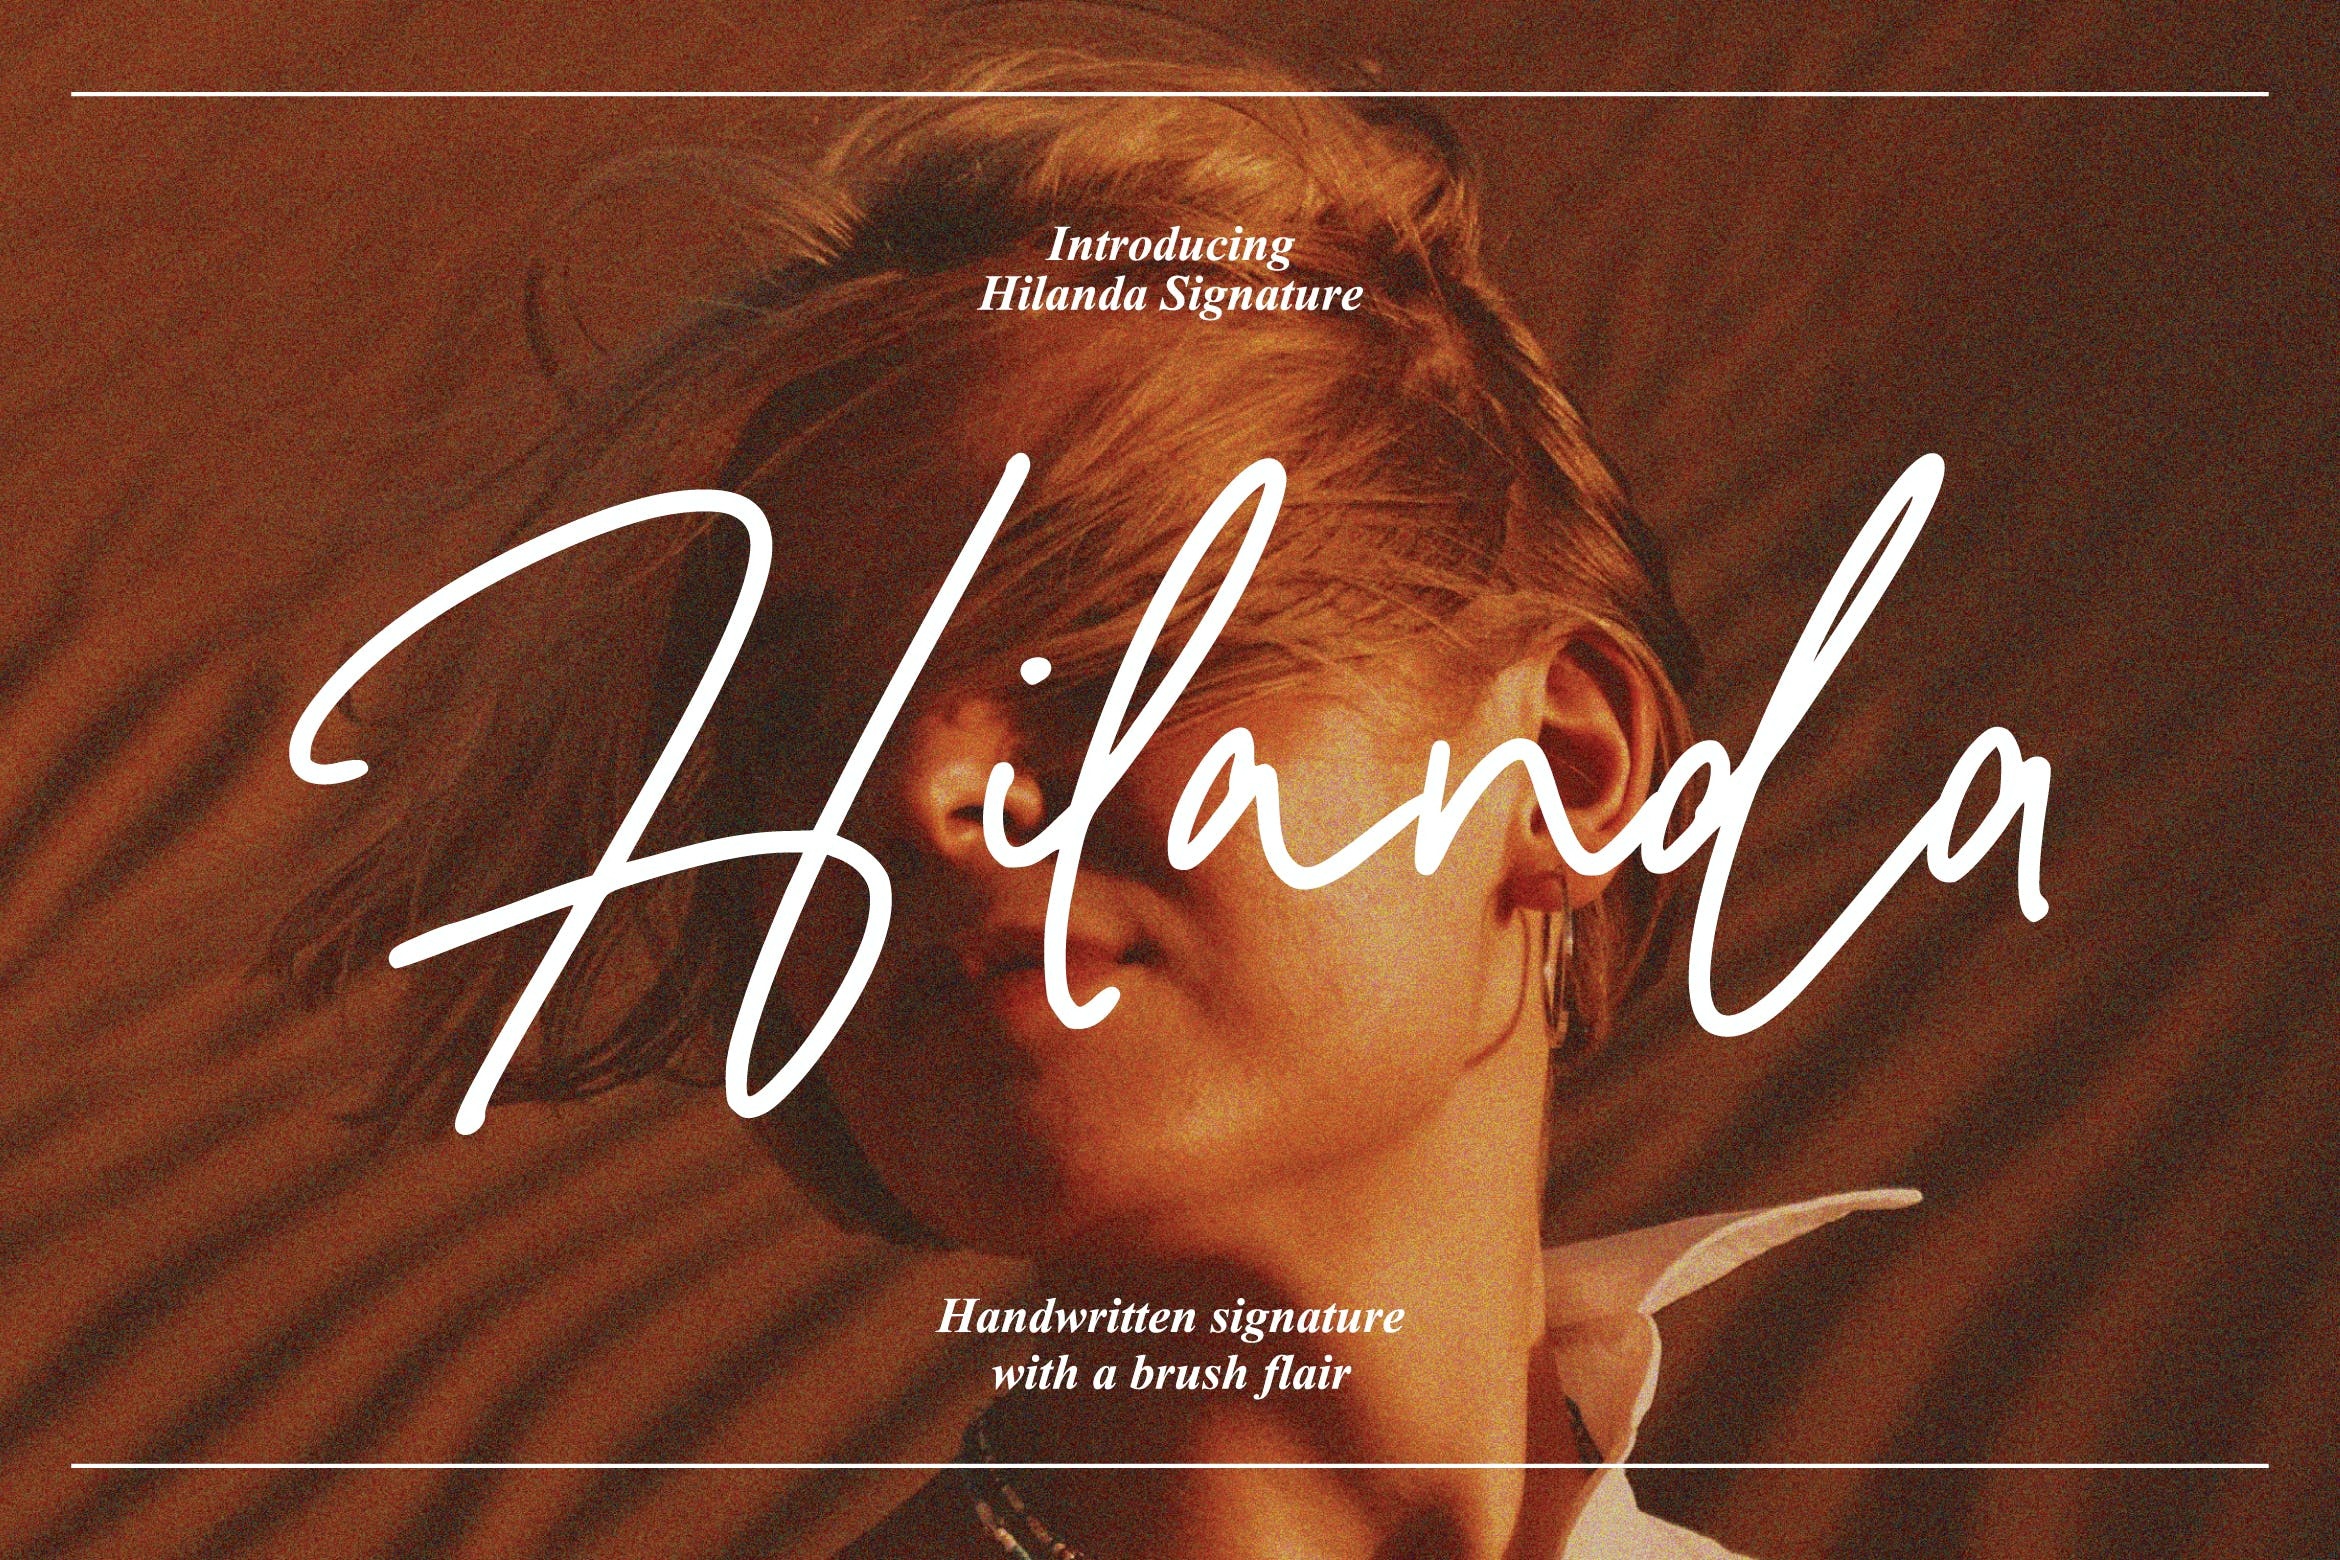 Hilanda Signature